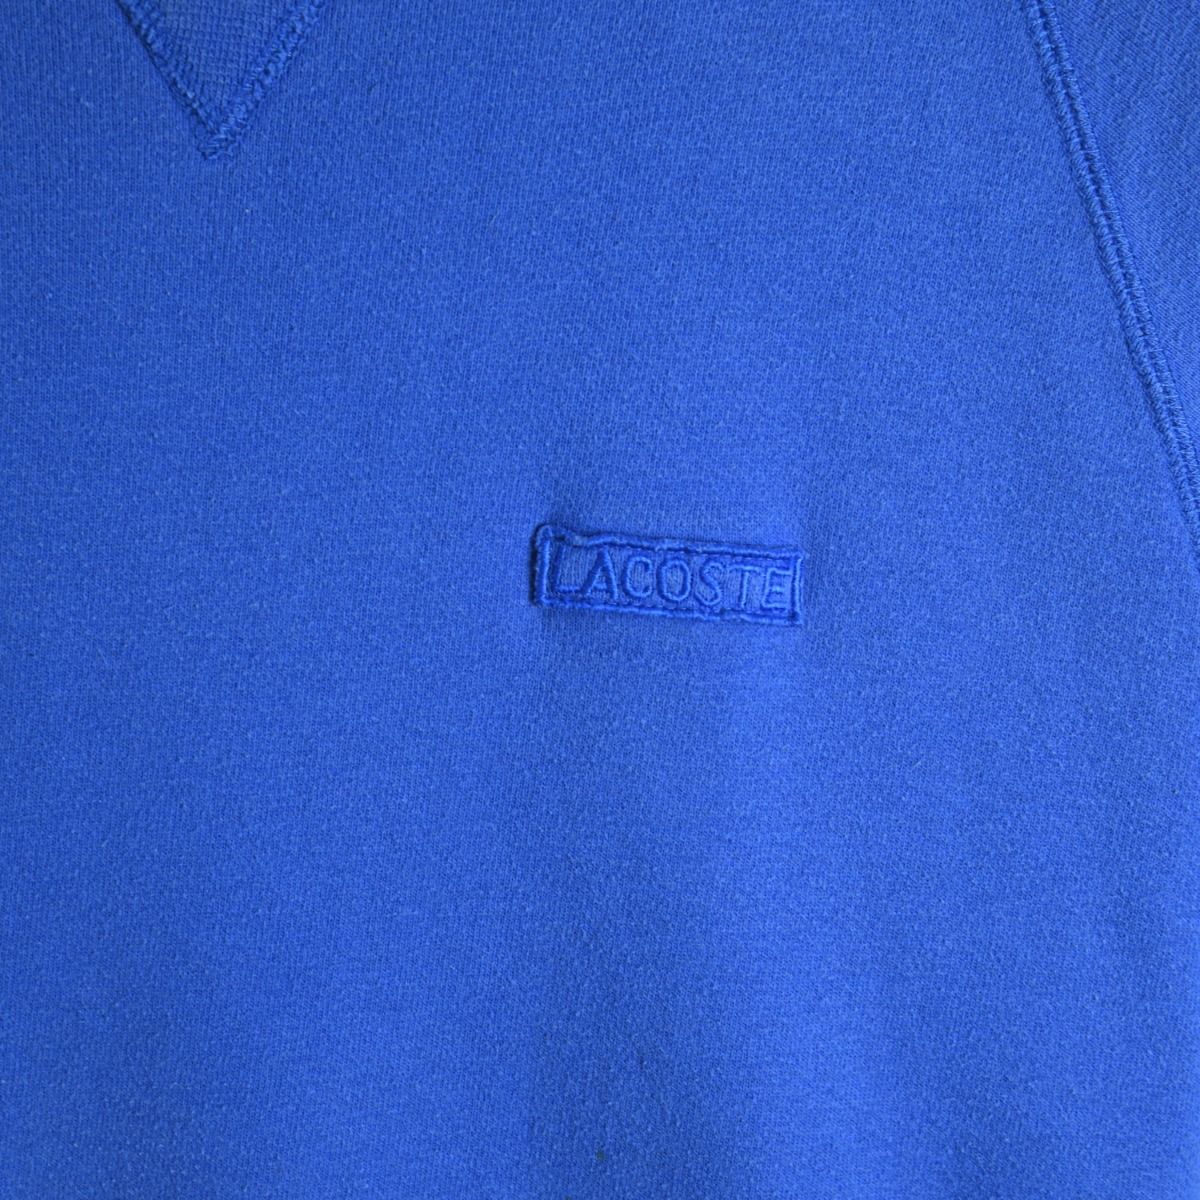 Lacoste IZOD 1980s Sweatshirt